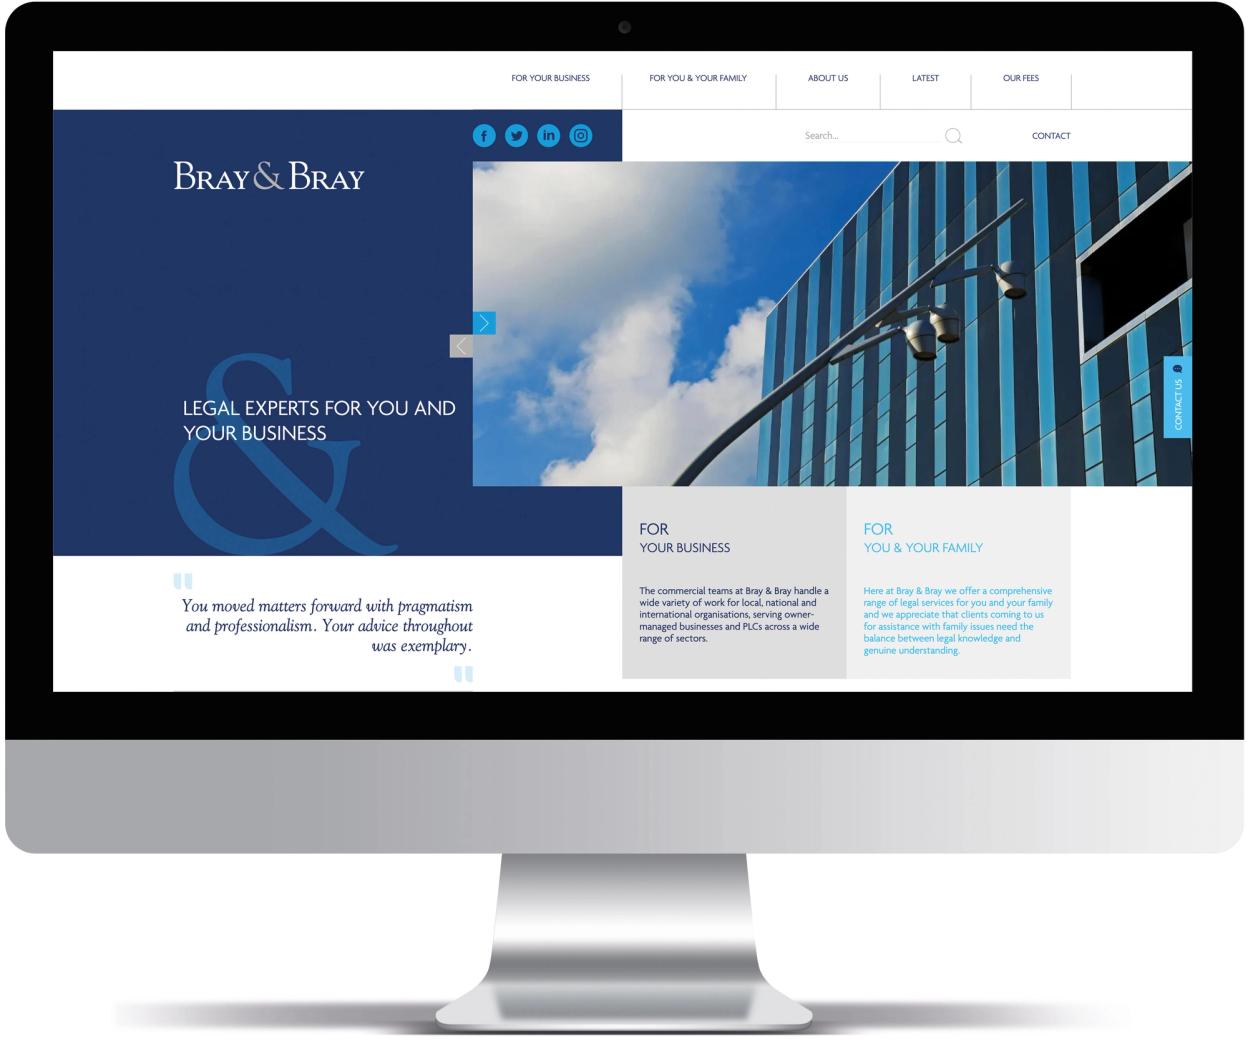 Web site developed for Bray & Bray